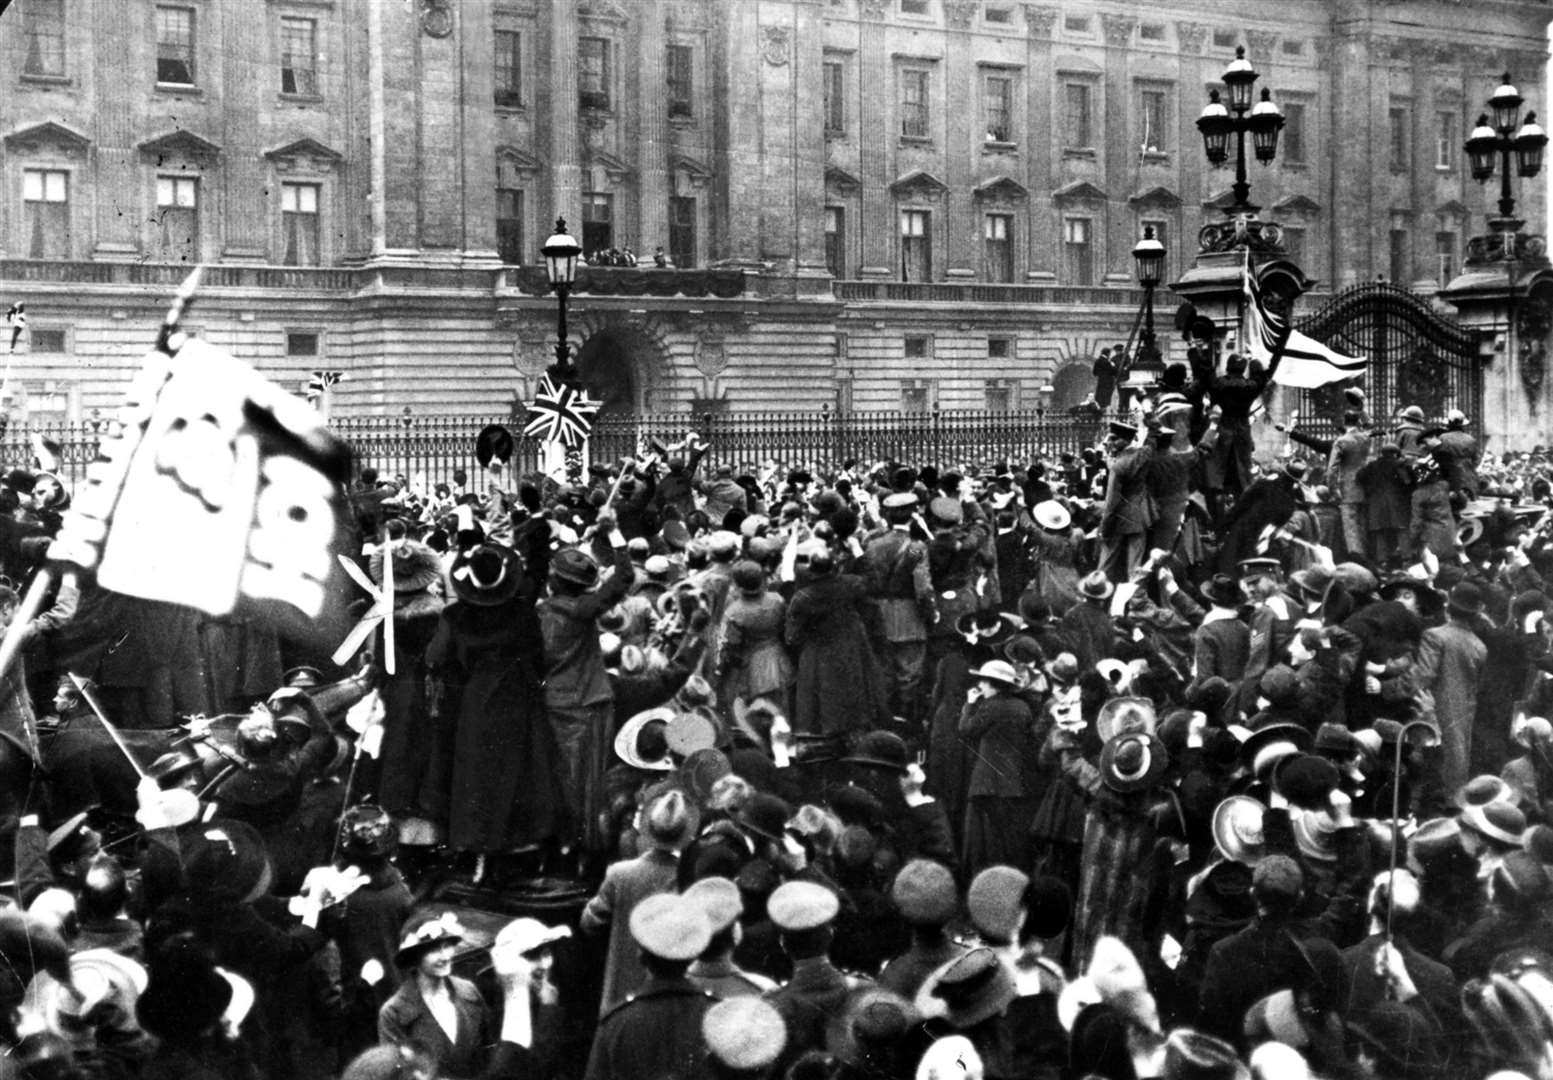 The scene outside Buckingham Palace on Armistice Day